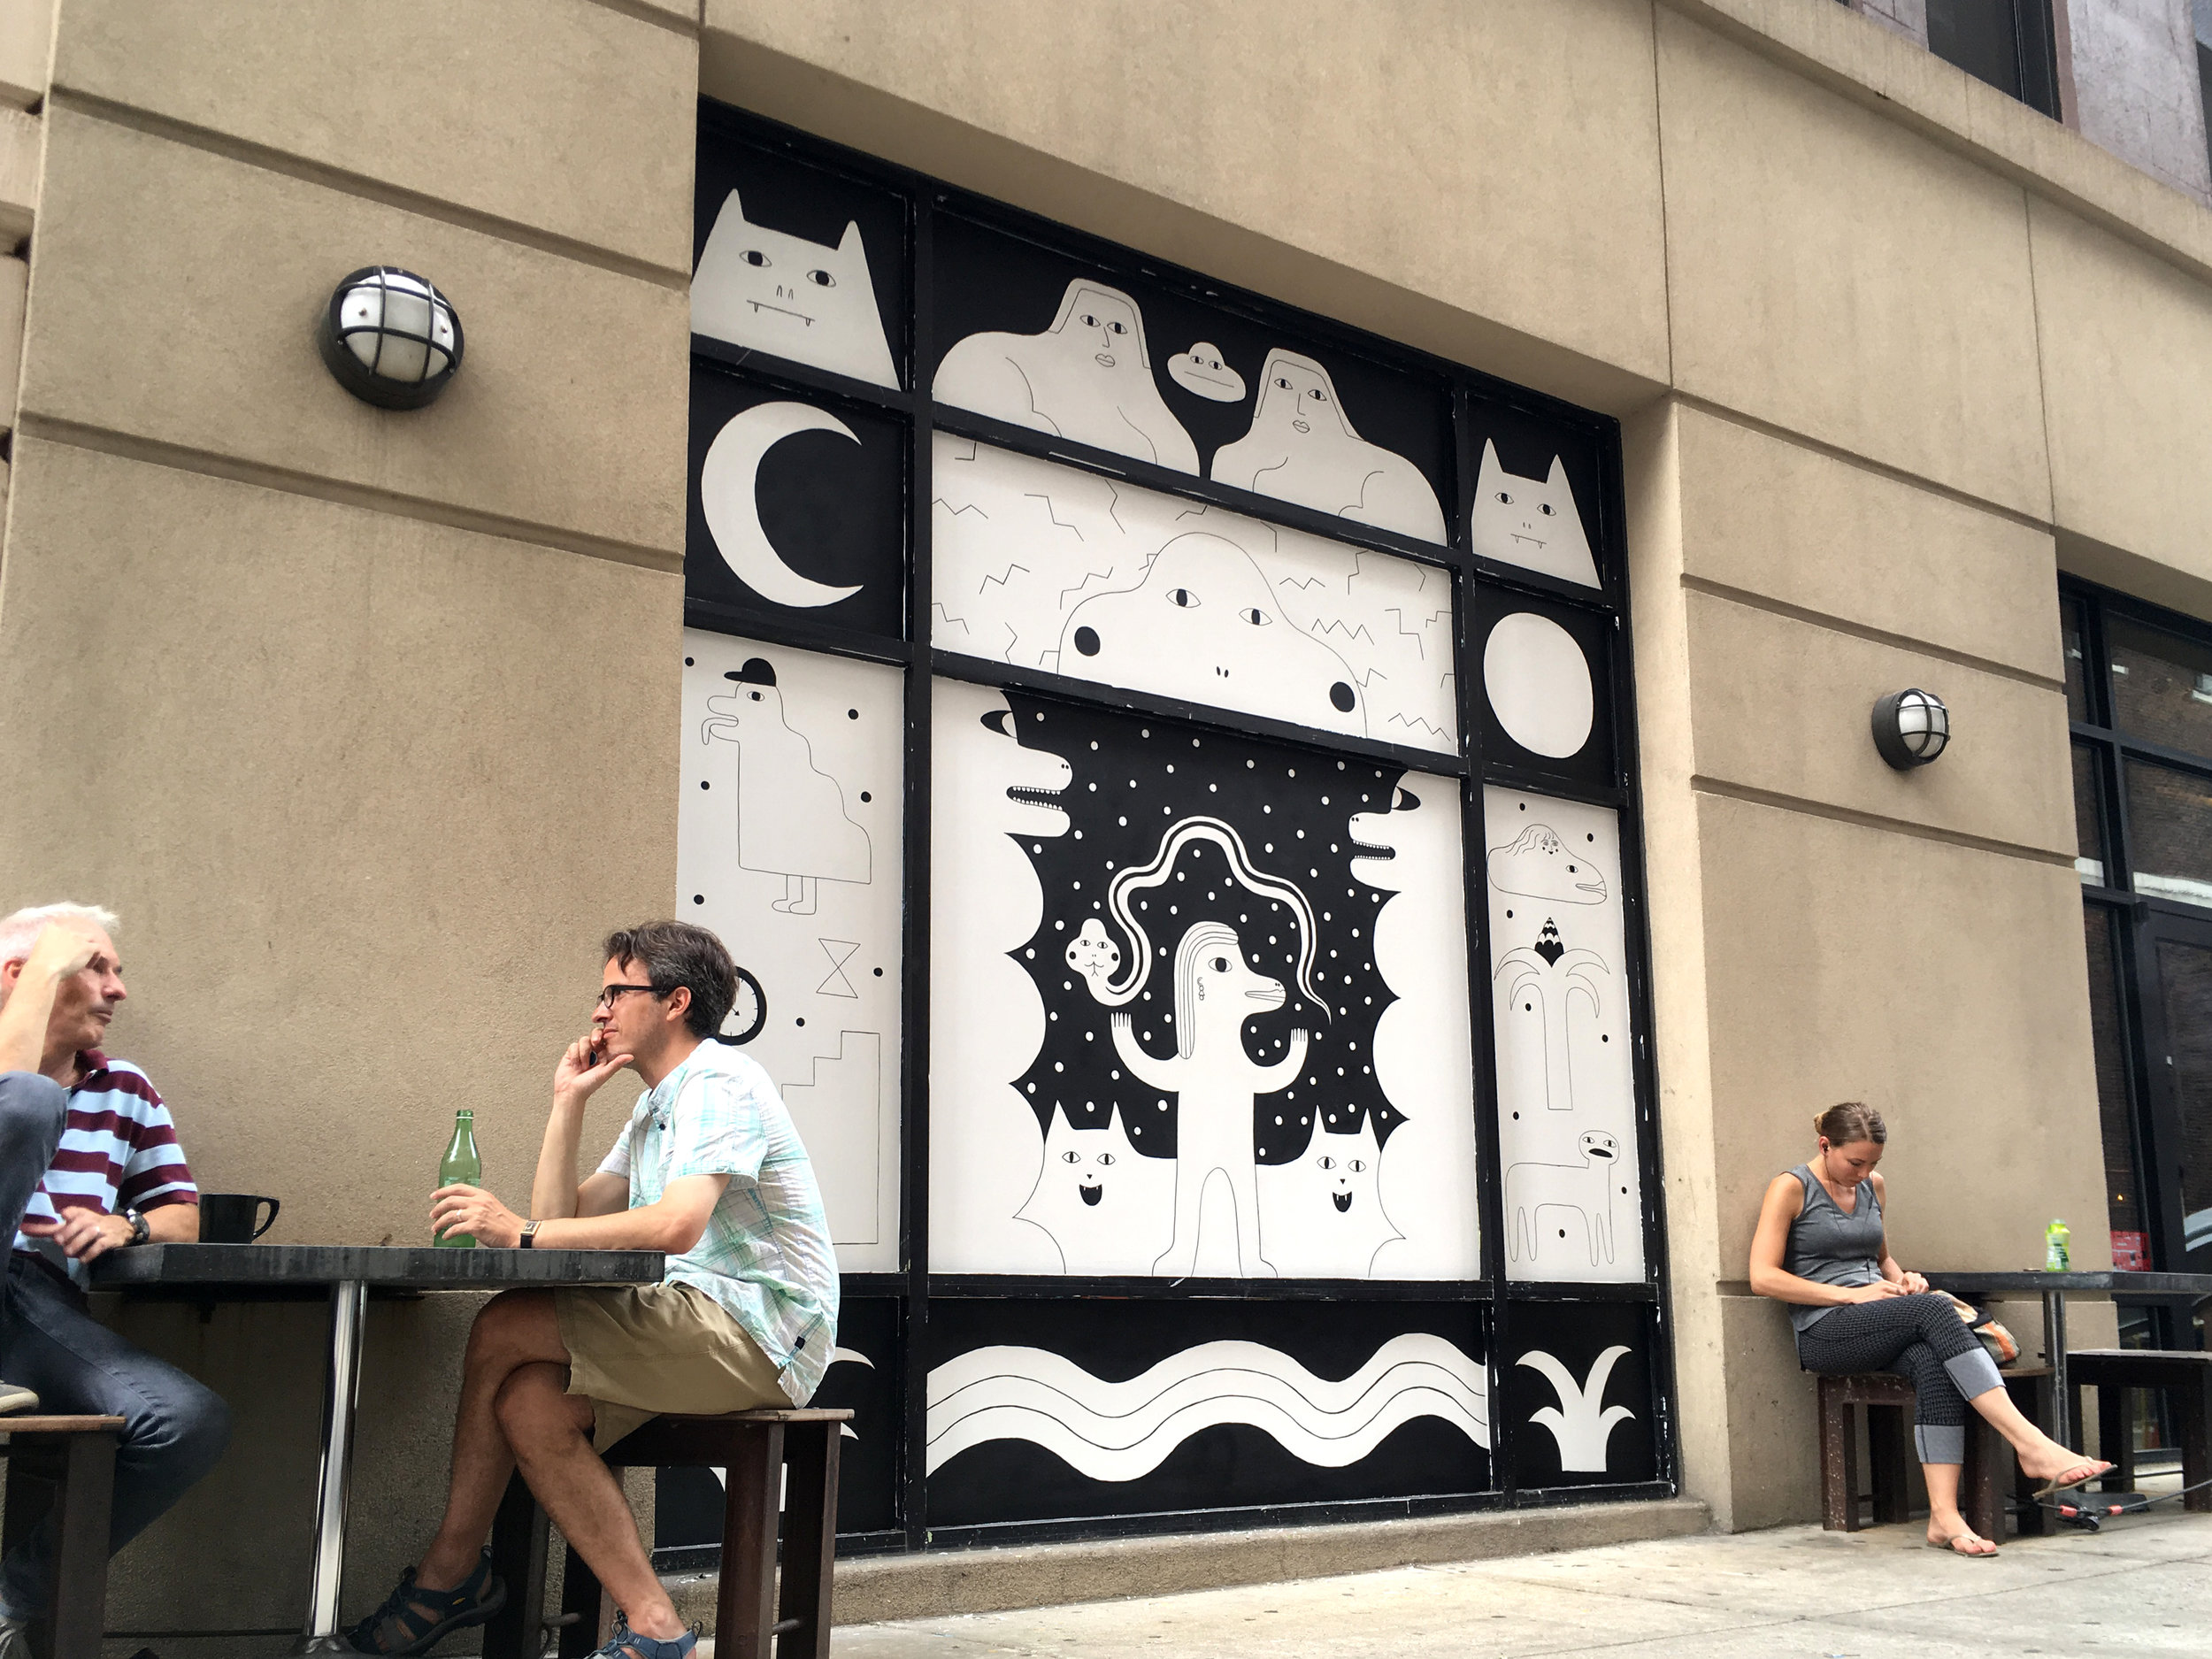  Mural on glass, Elixr Coffee, Philadelphia, PA 2016 